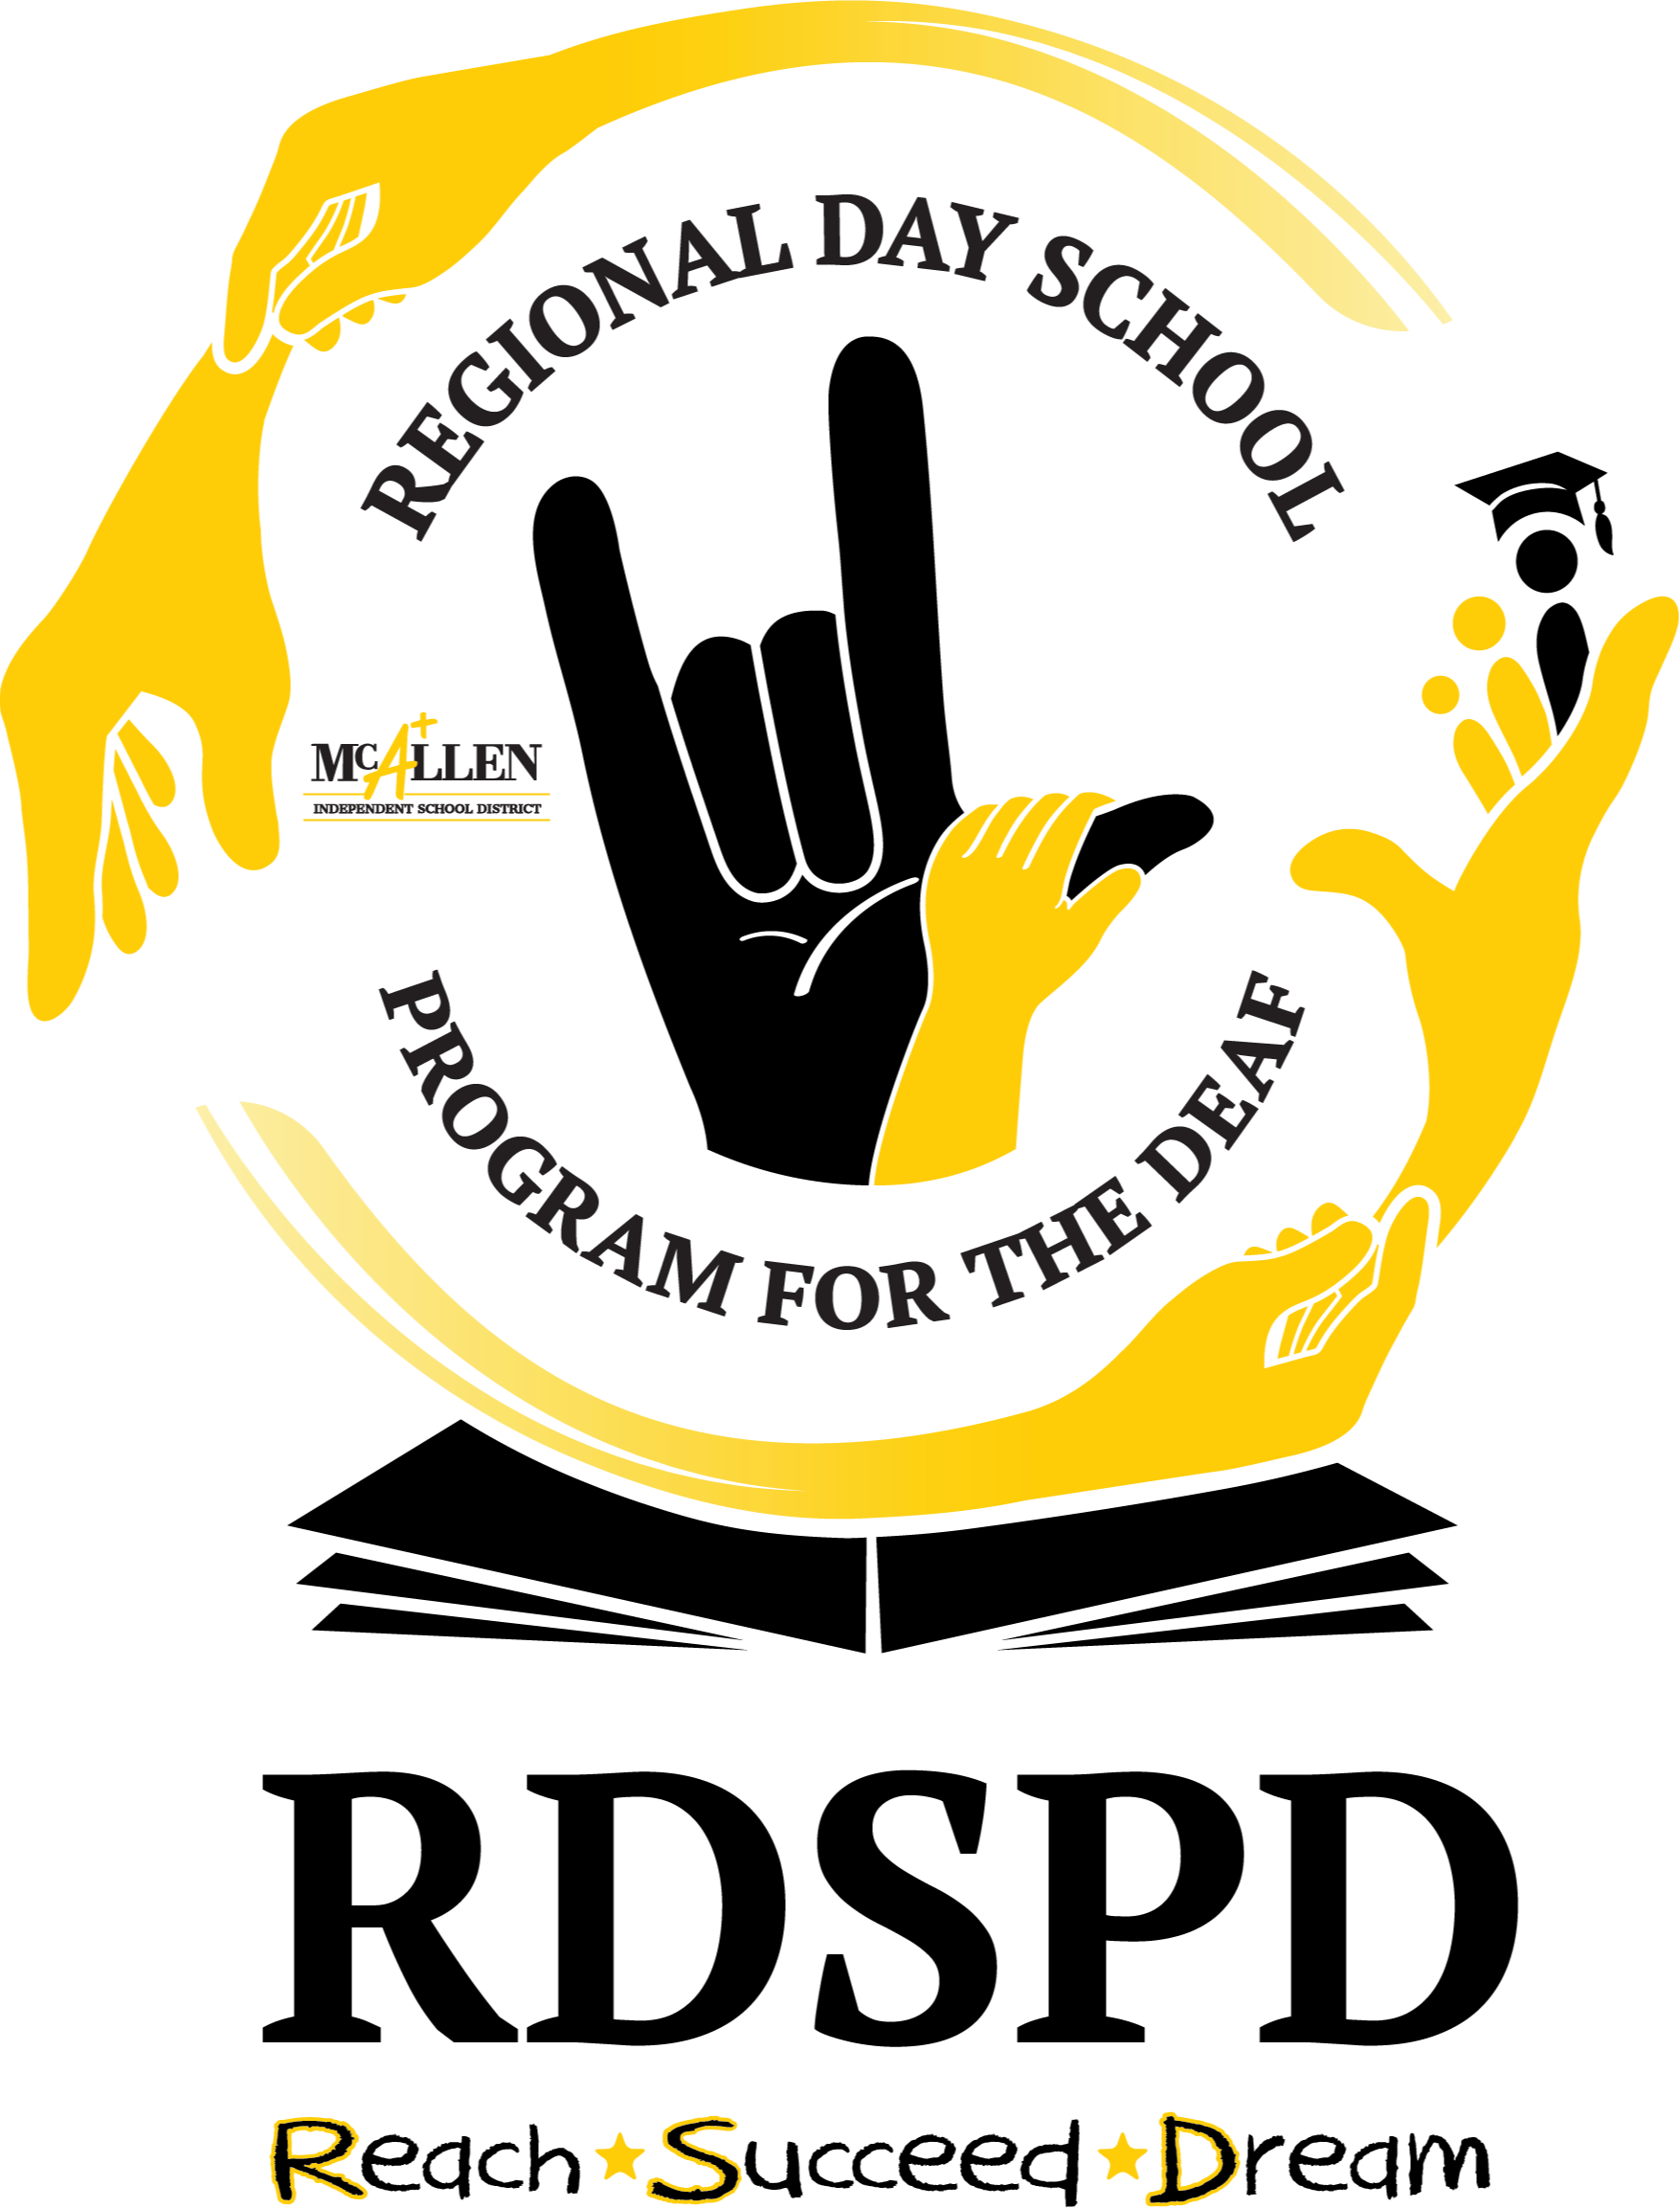 Regional Day School Program for the Deaf logo